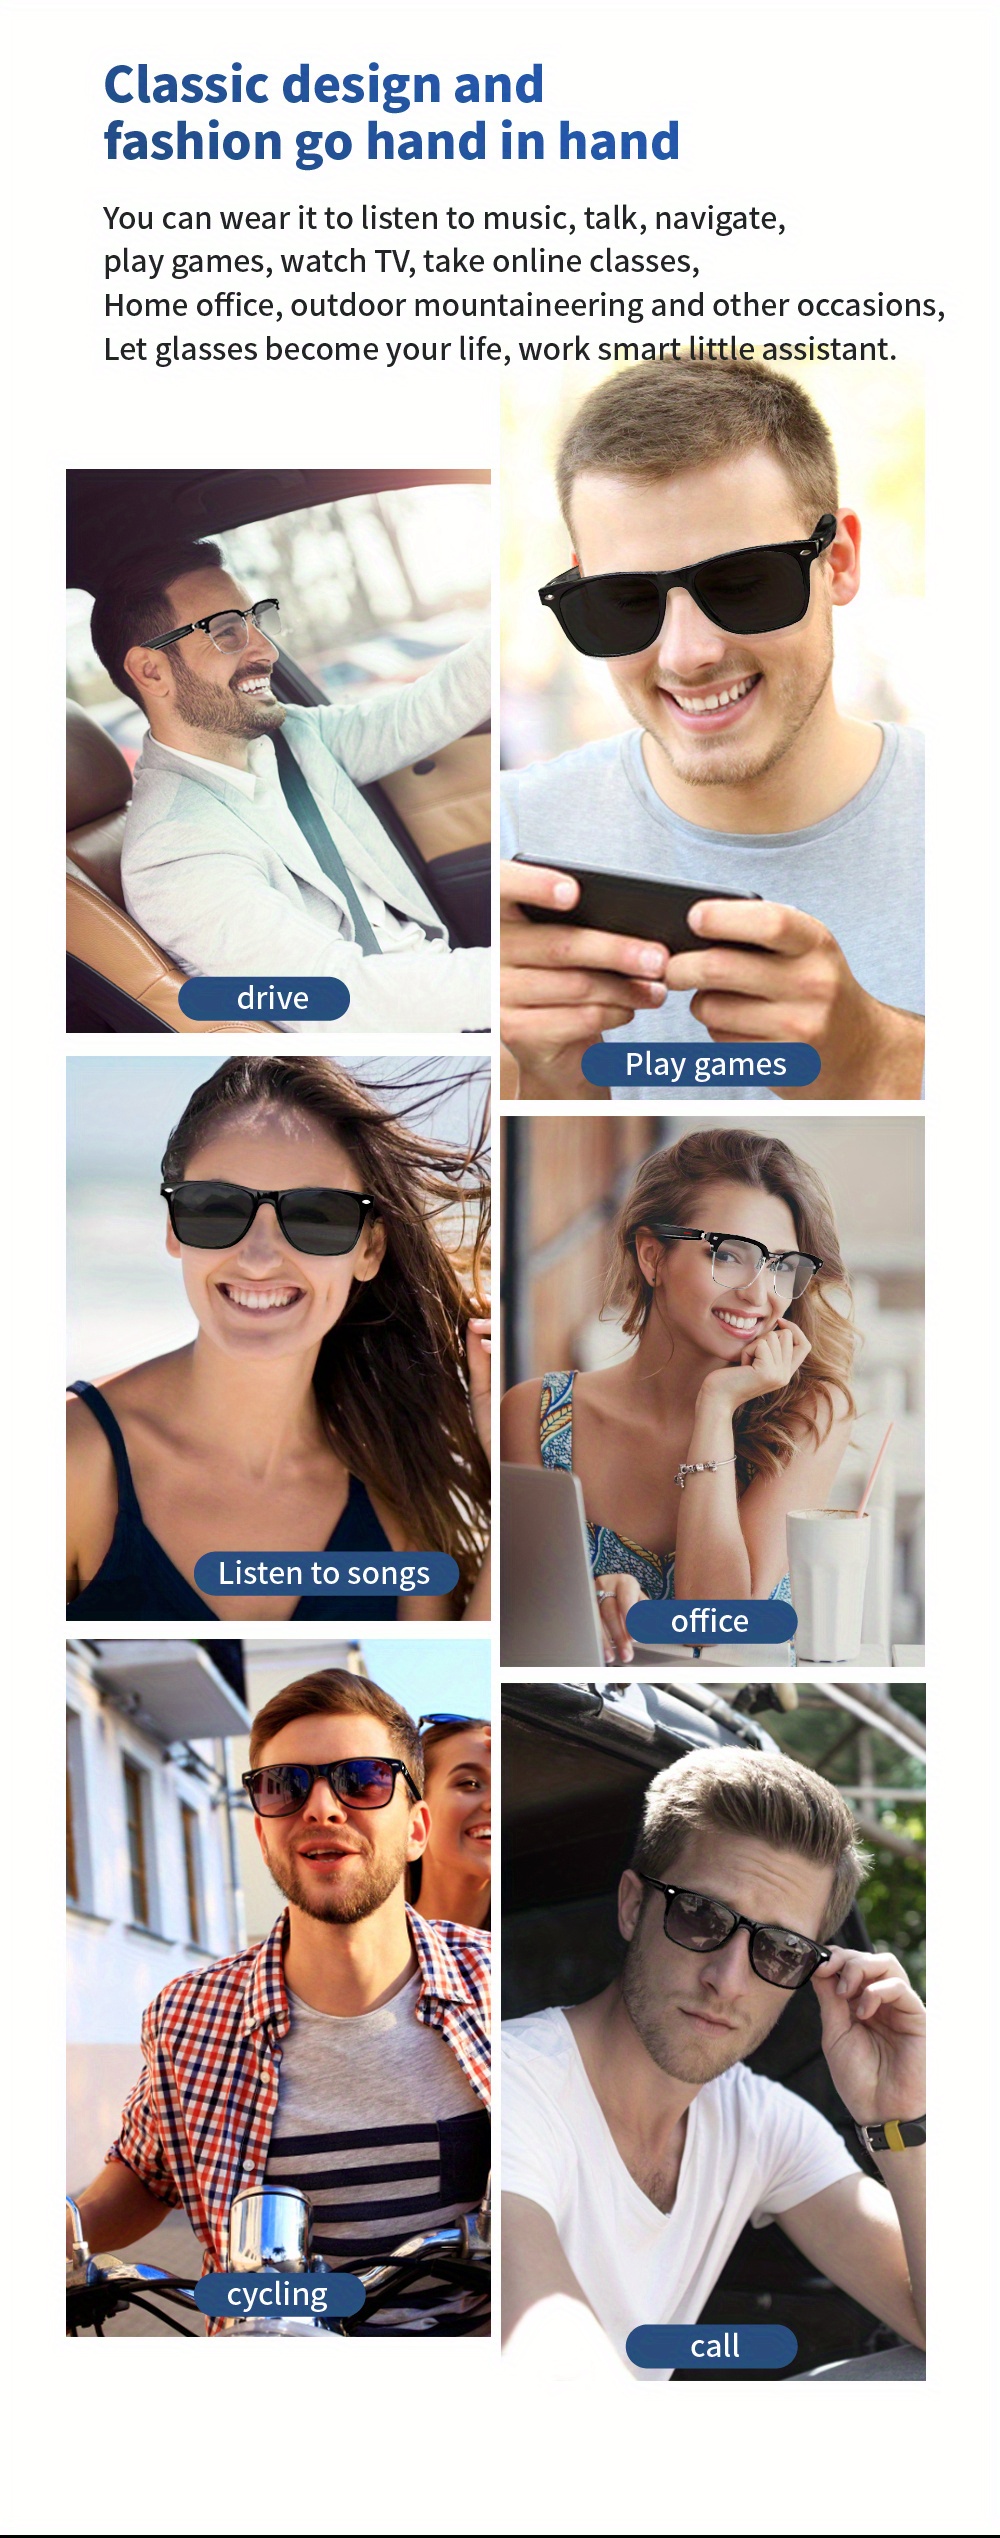 Gafas Inteligentes Inalámbricas Tws Bluetooth 5.0 - Temu Mexico